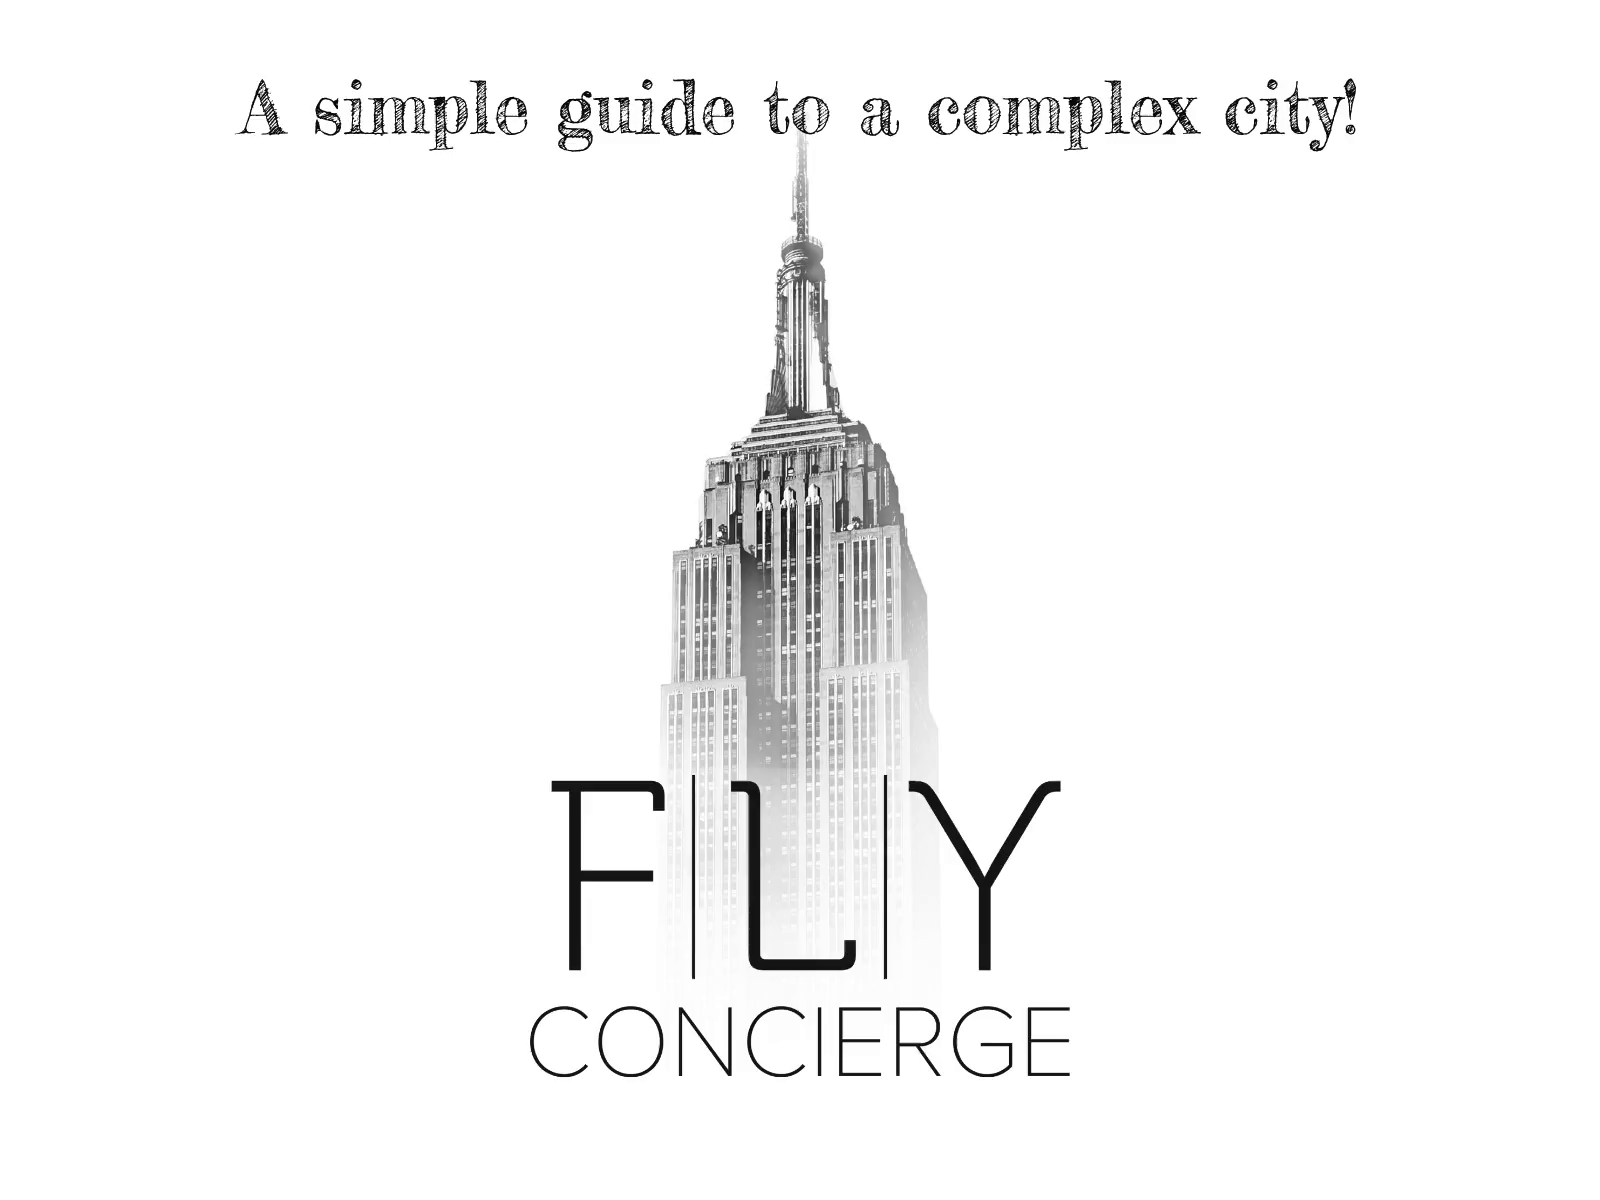 Wallpaper City Guides App